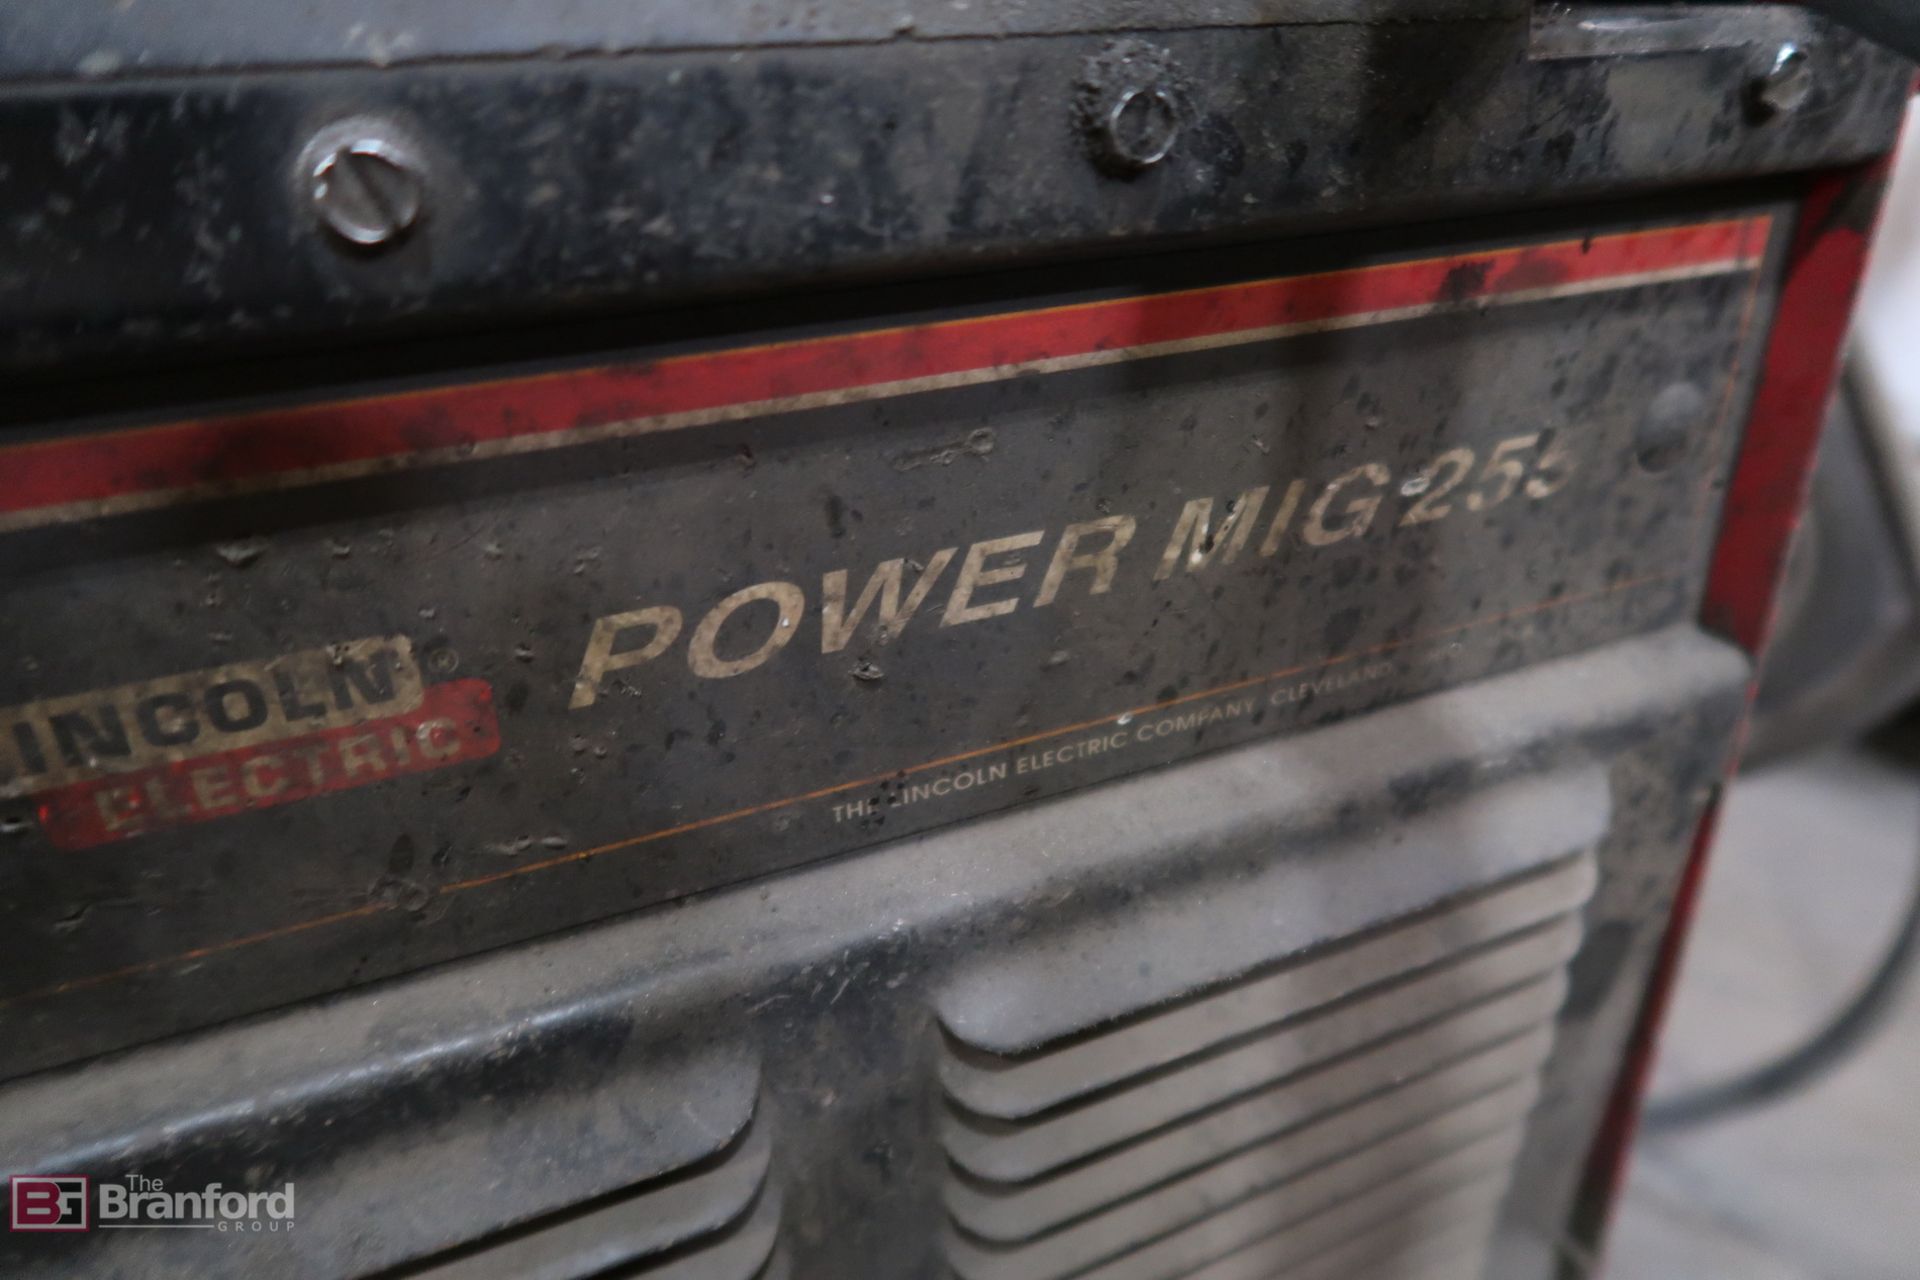 Lincoln Power Mig 255 Mig Welder - Image 4 of 6